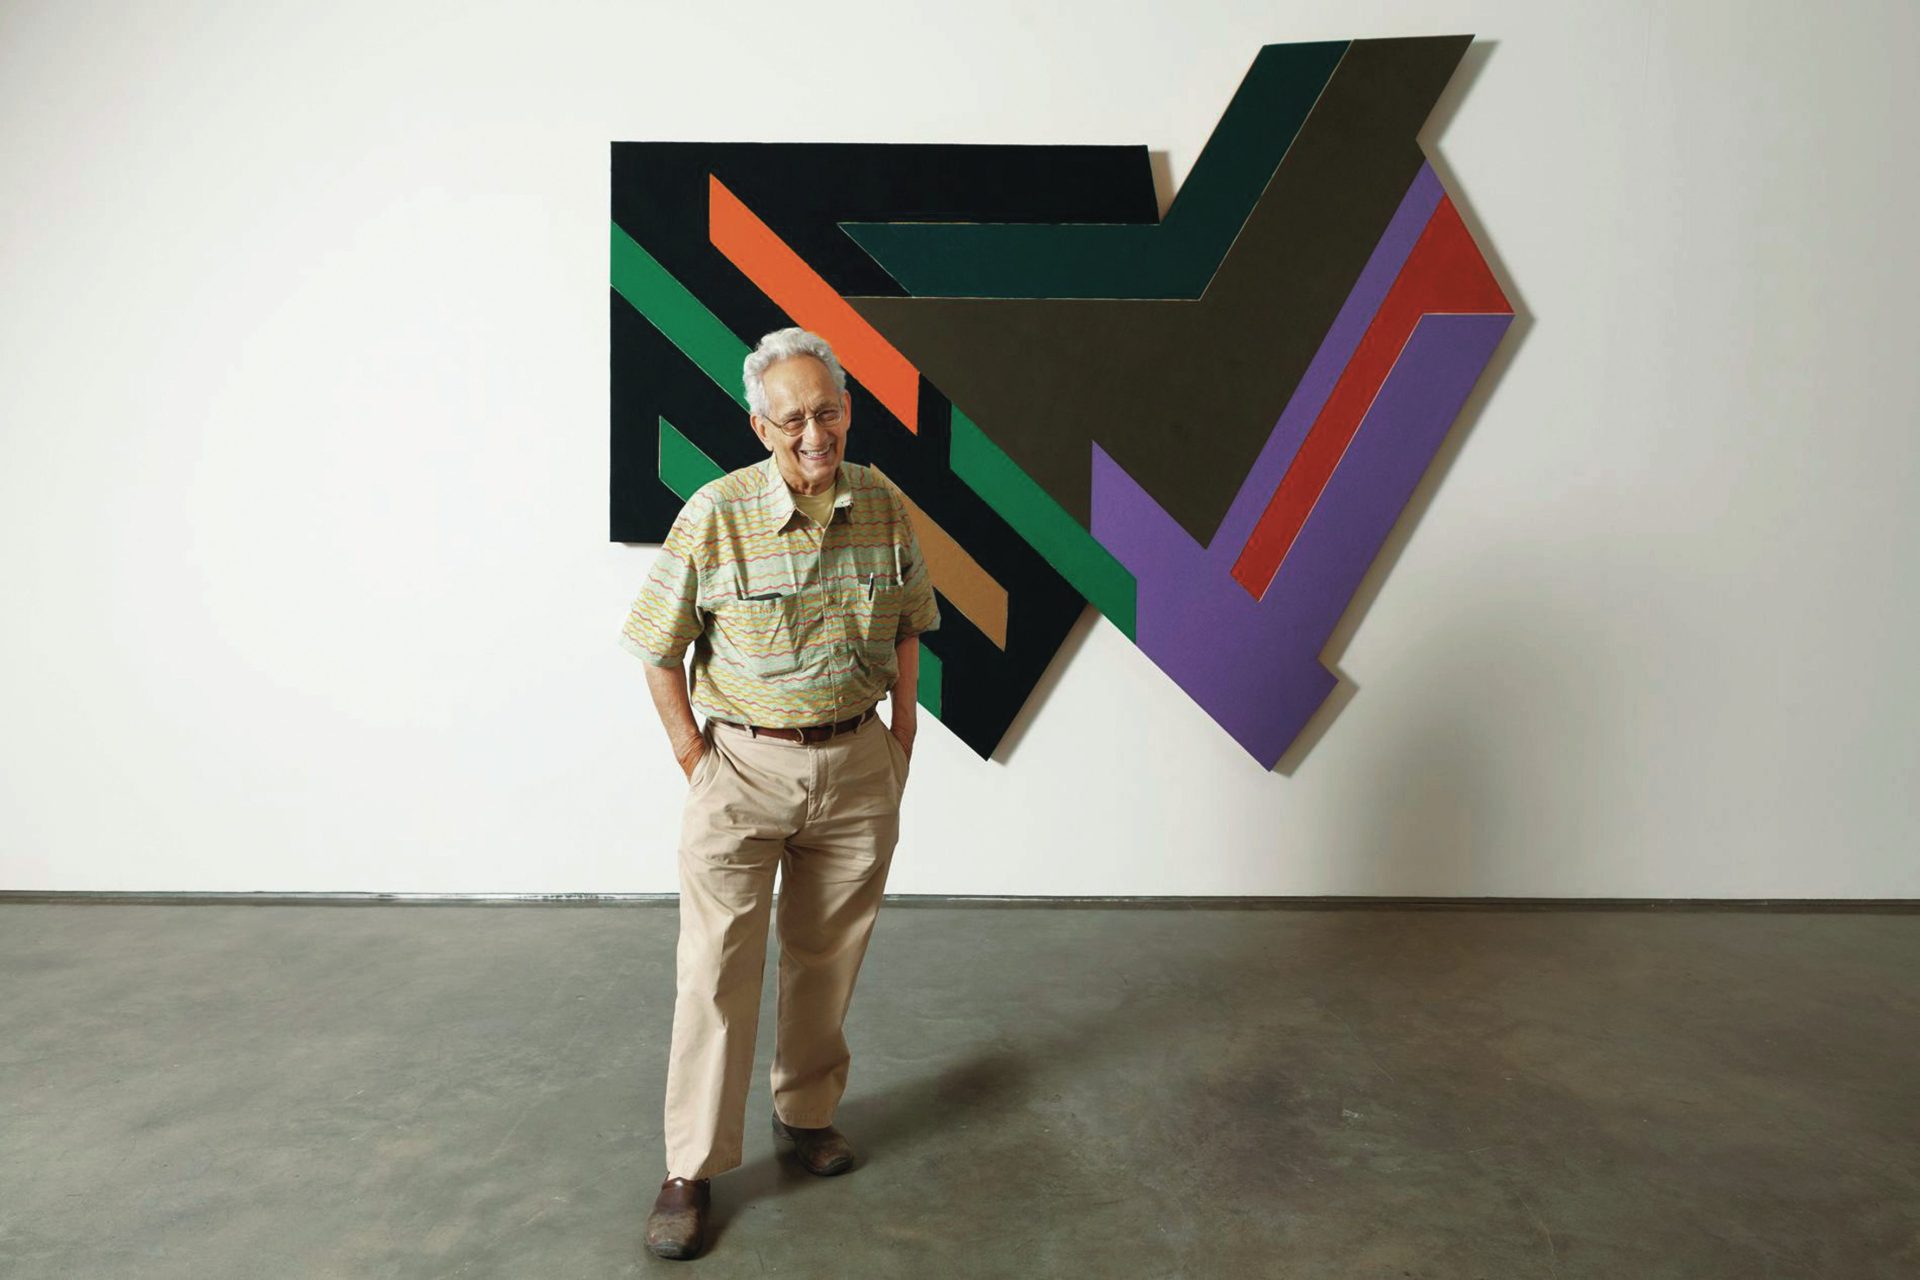 Morreu o pintor e escultor Frank Stella